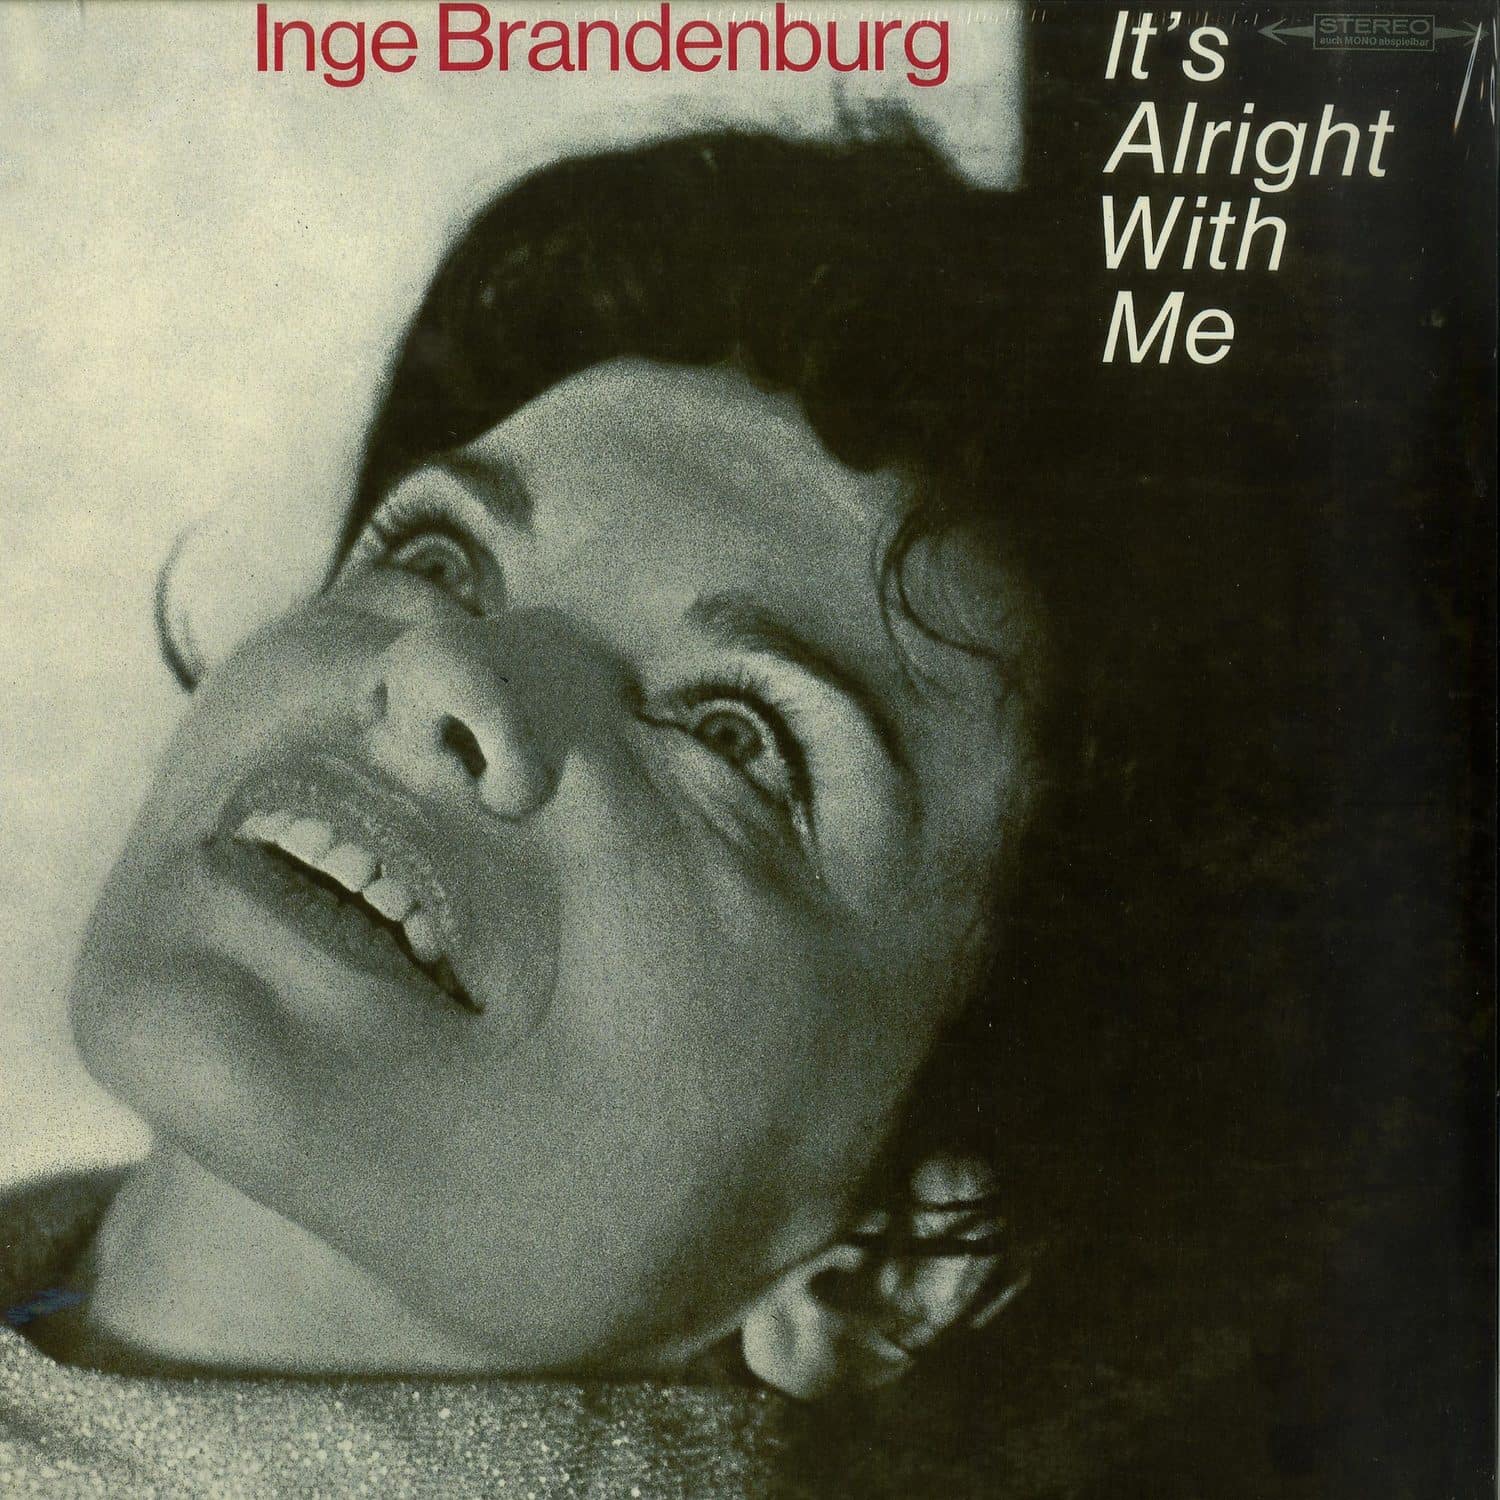 Inge Brandenburg - ITS ALRIGHT WITH ME 